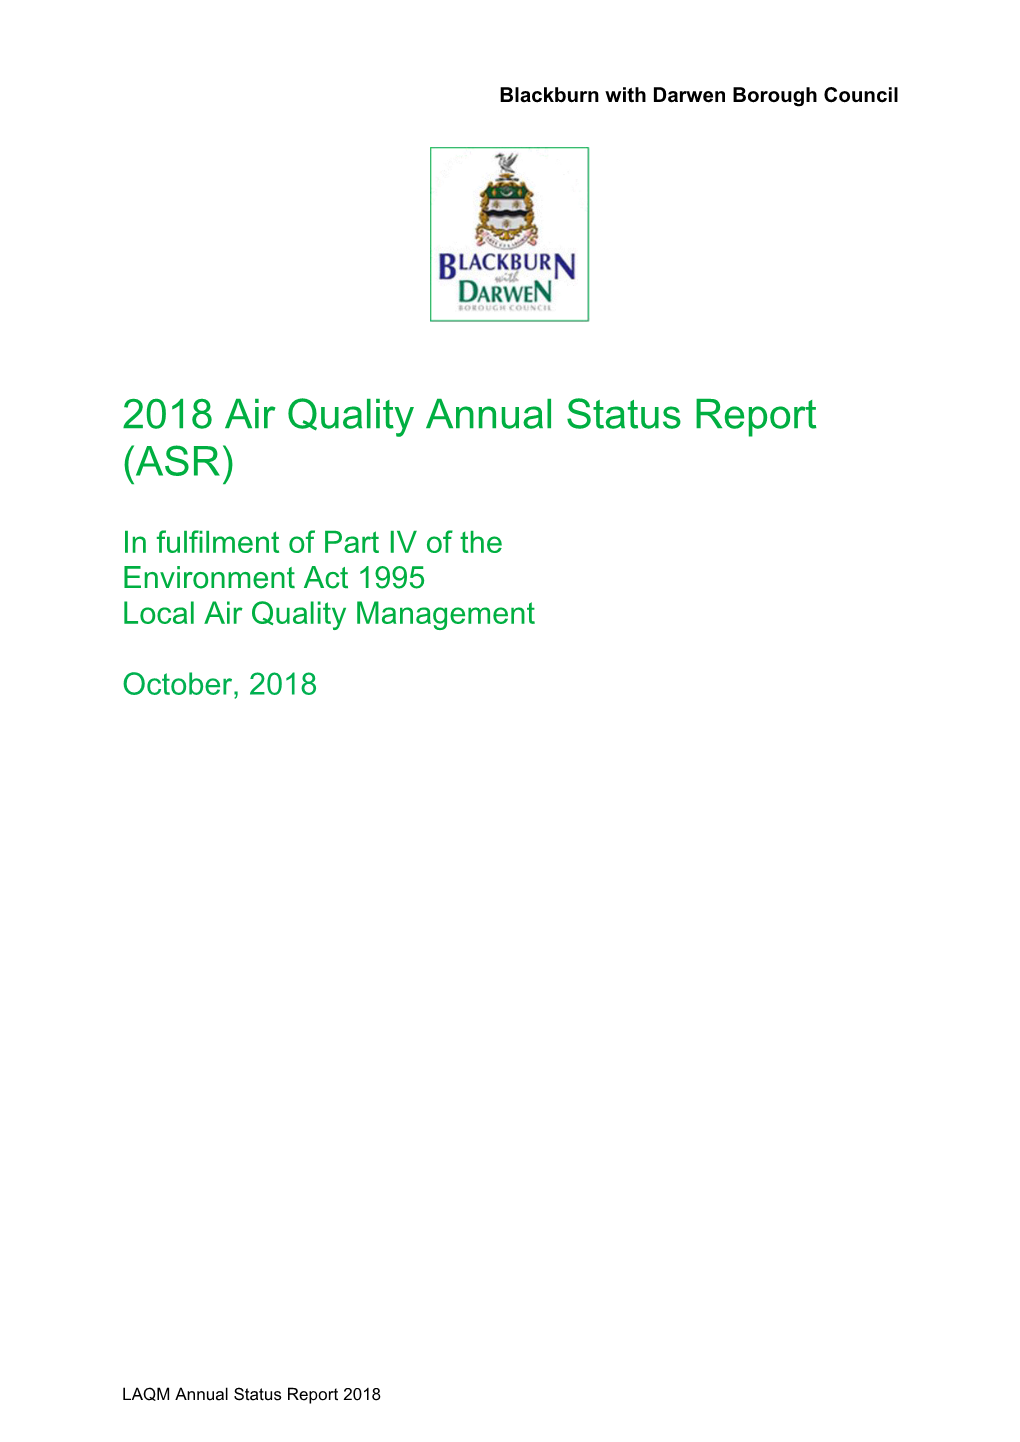 Air Quality: Annual Status Report 2018